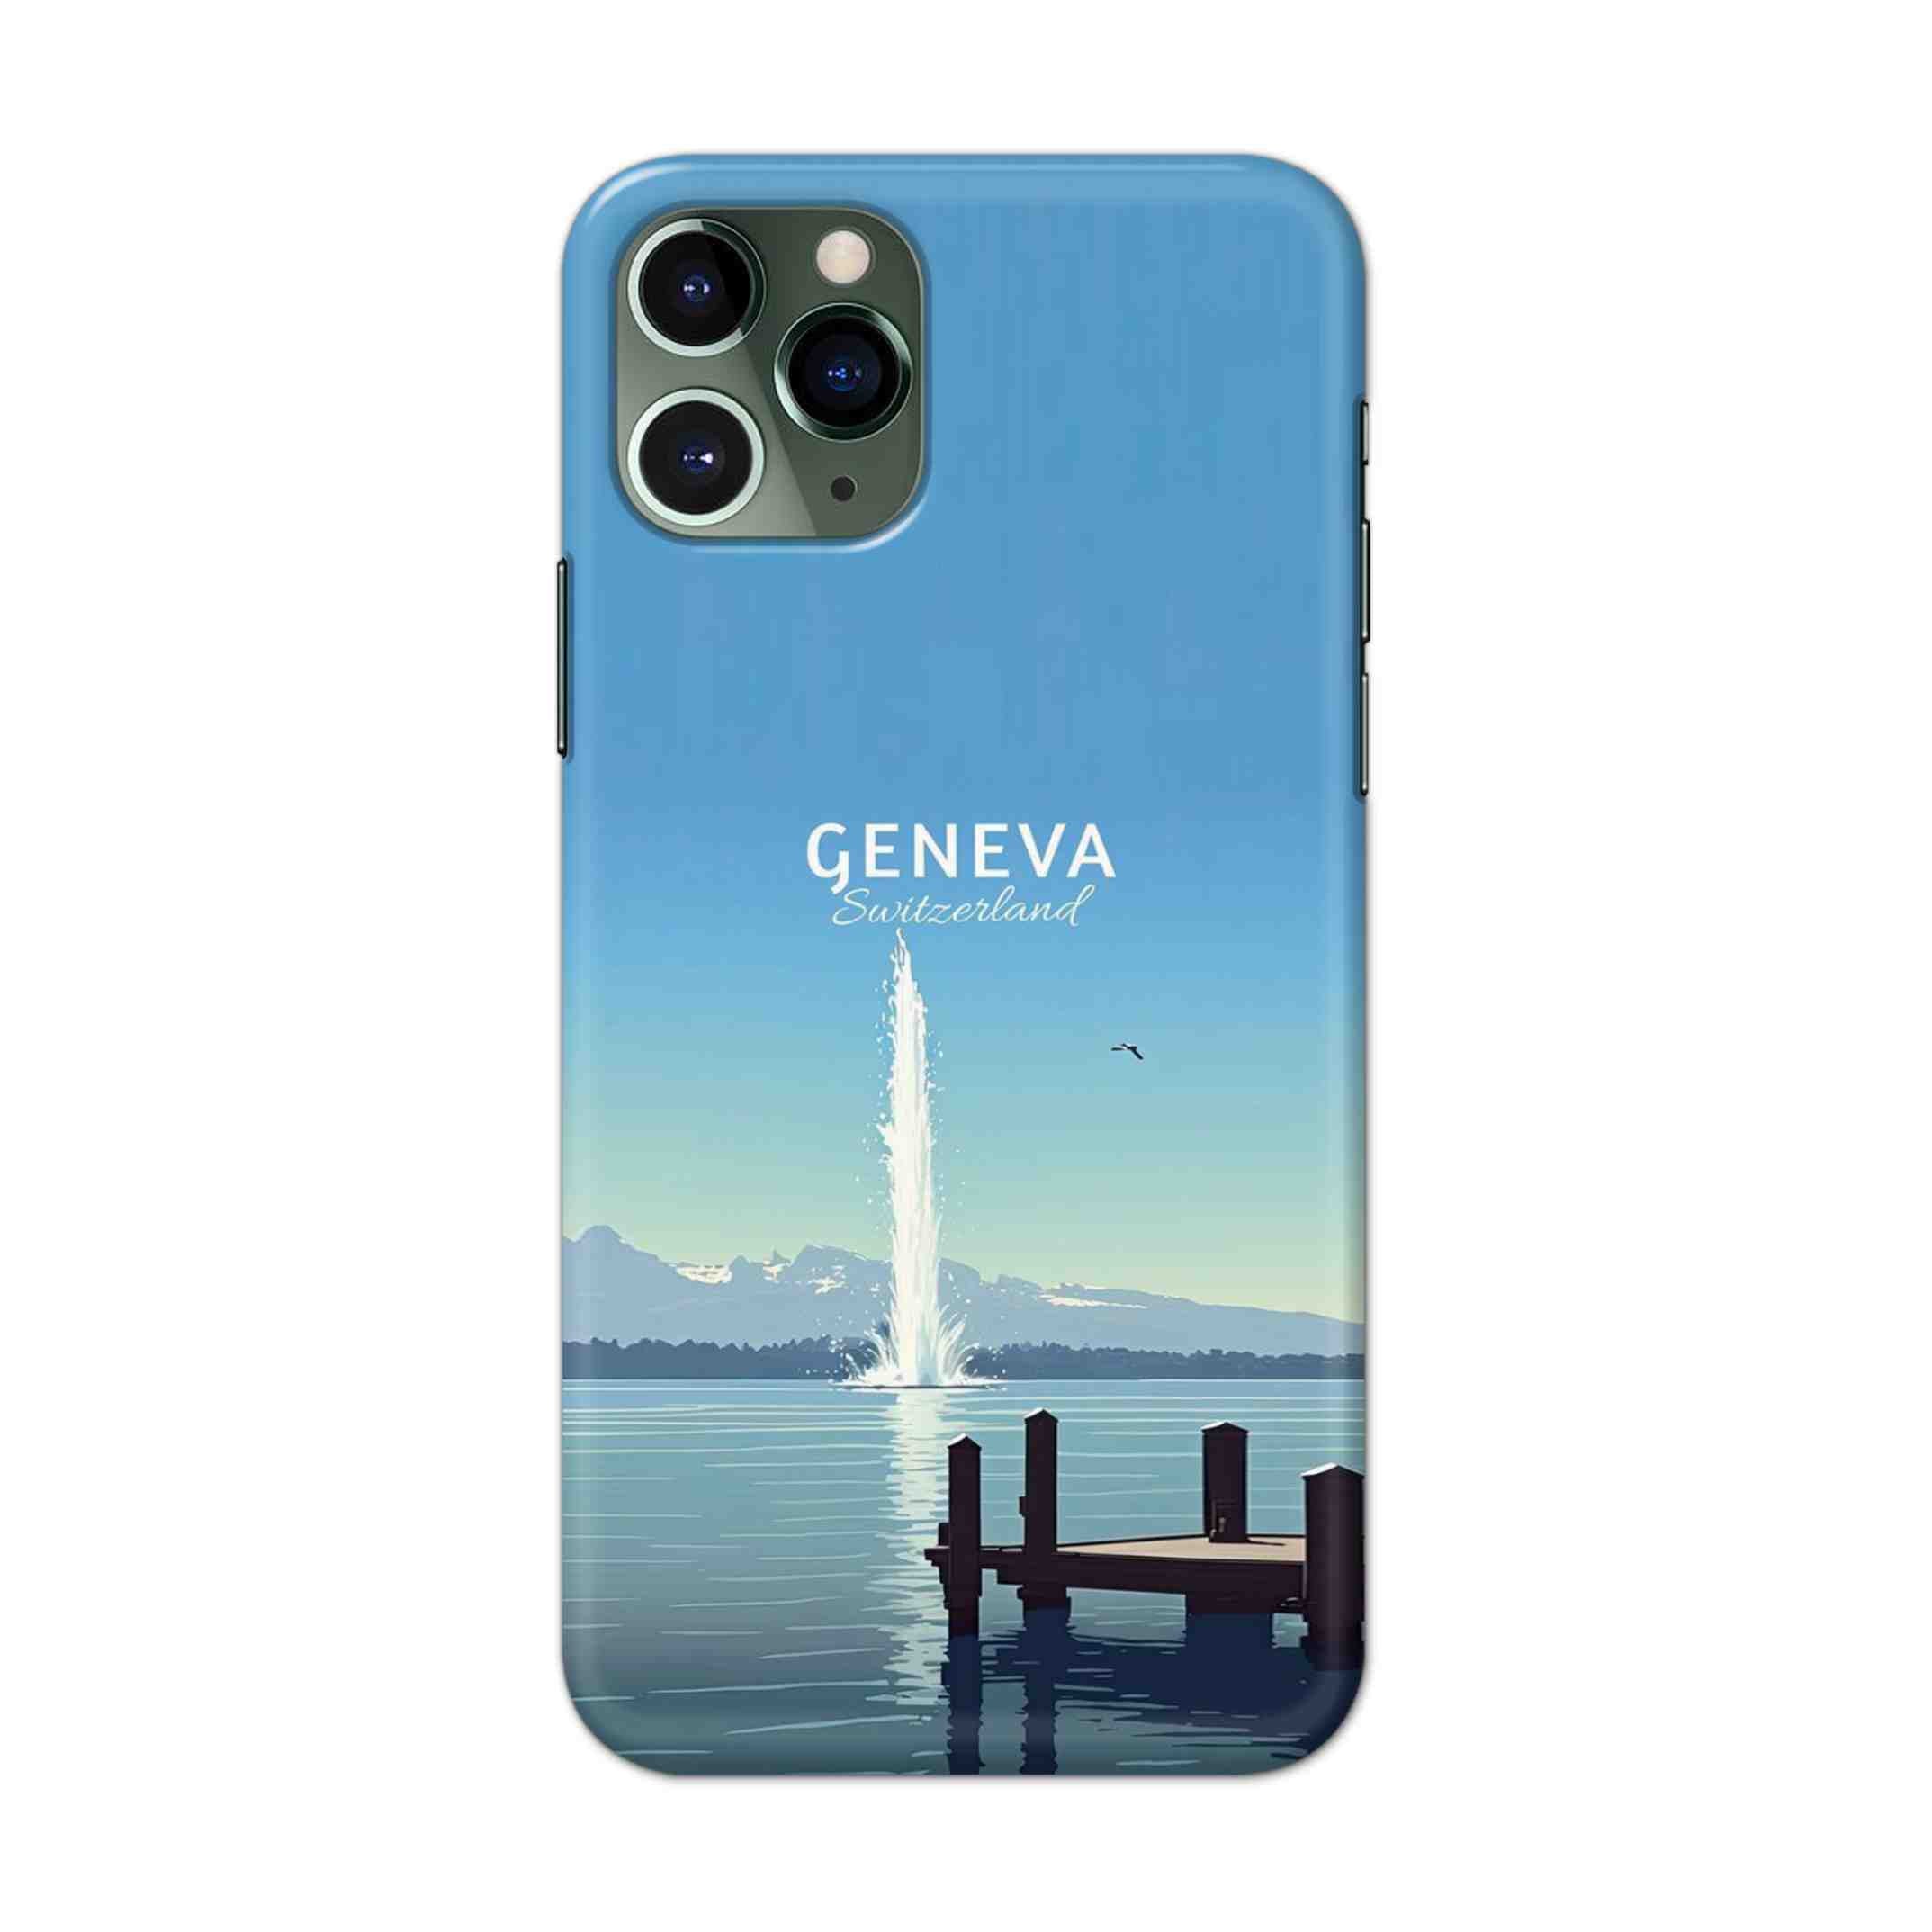 Buy Geneva Hard Back Mobile Phone Case/Cover For iPhone 11 Pro Online